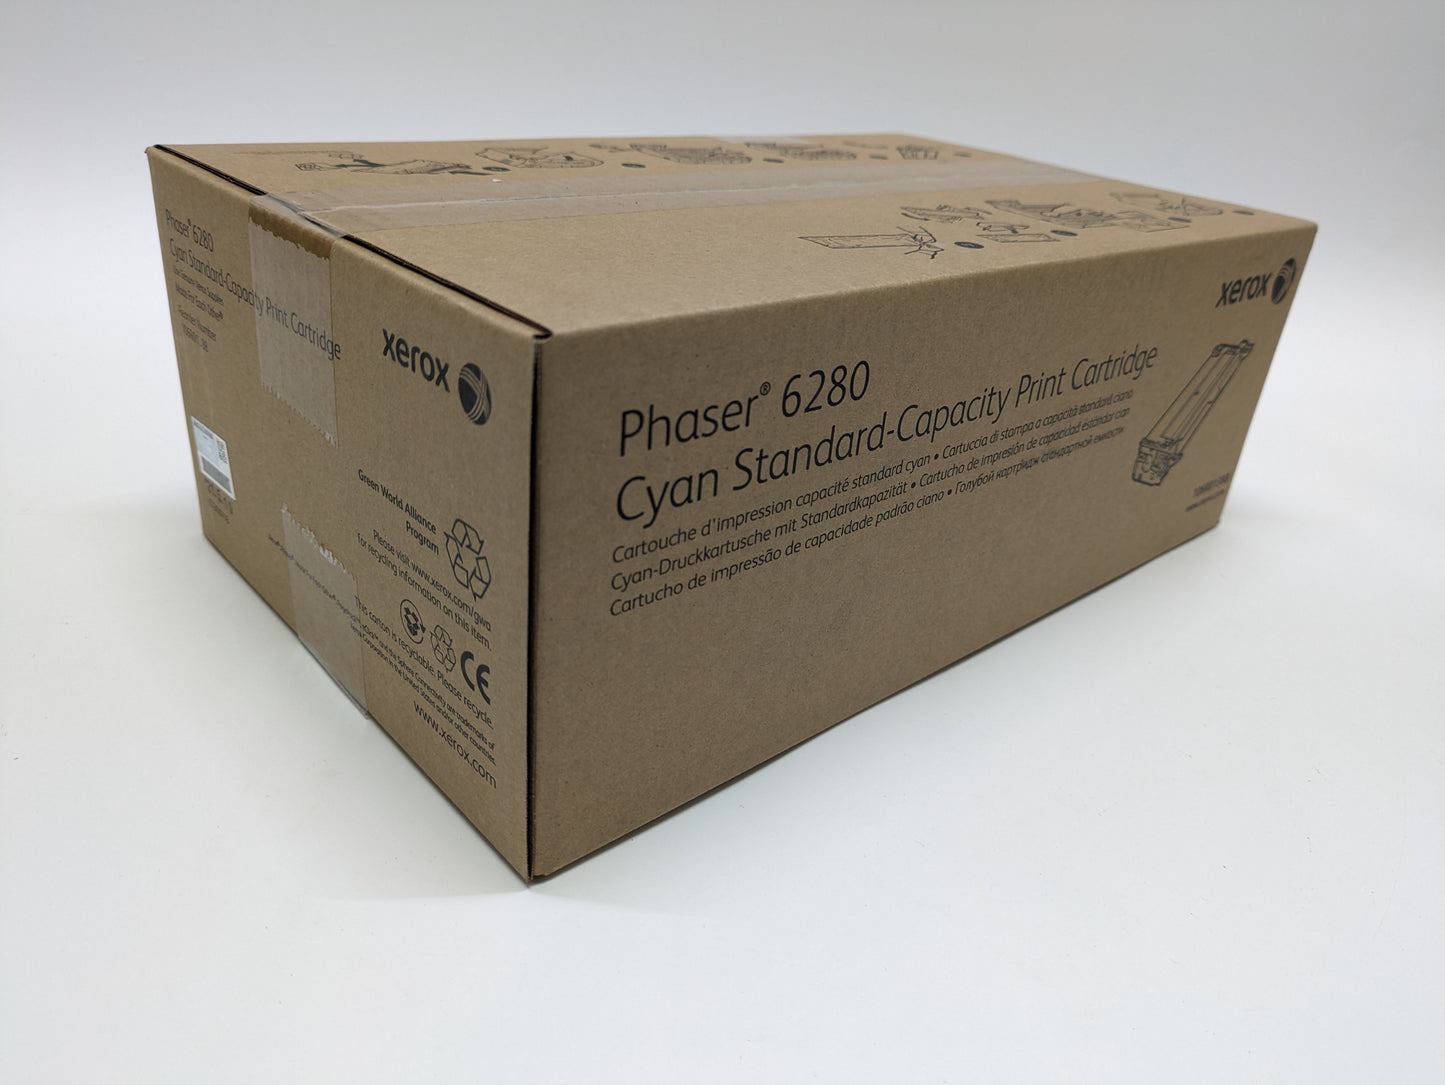 Xerox Phaser 6280 Cyan Print Cartridge - 106R01388 New